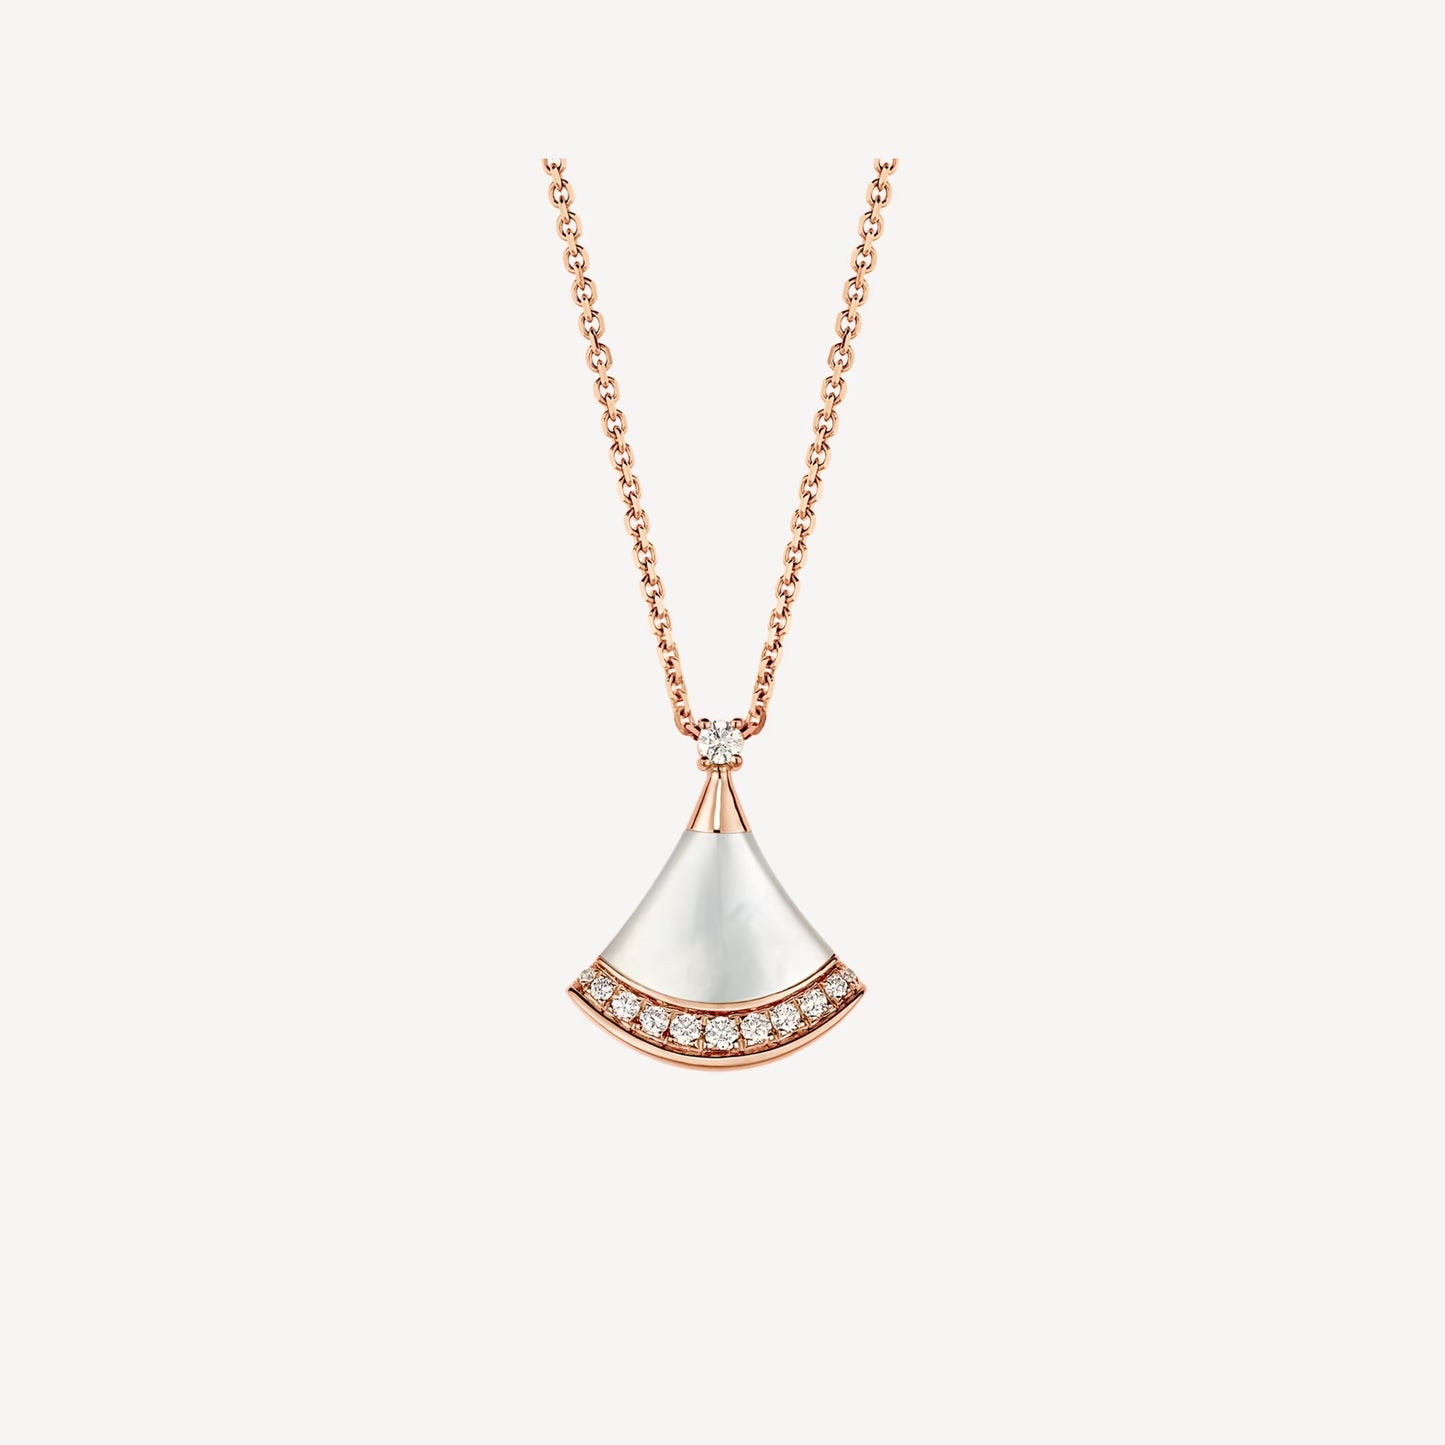 Bulgari Diva’s Dream Necklace “Rose Gold / Mother of Pearl”